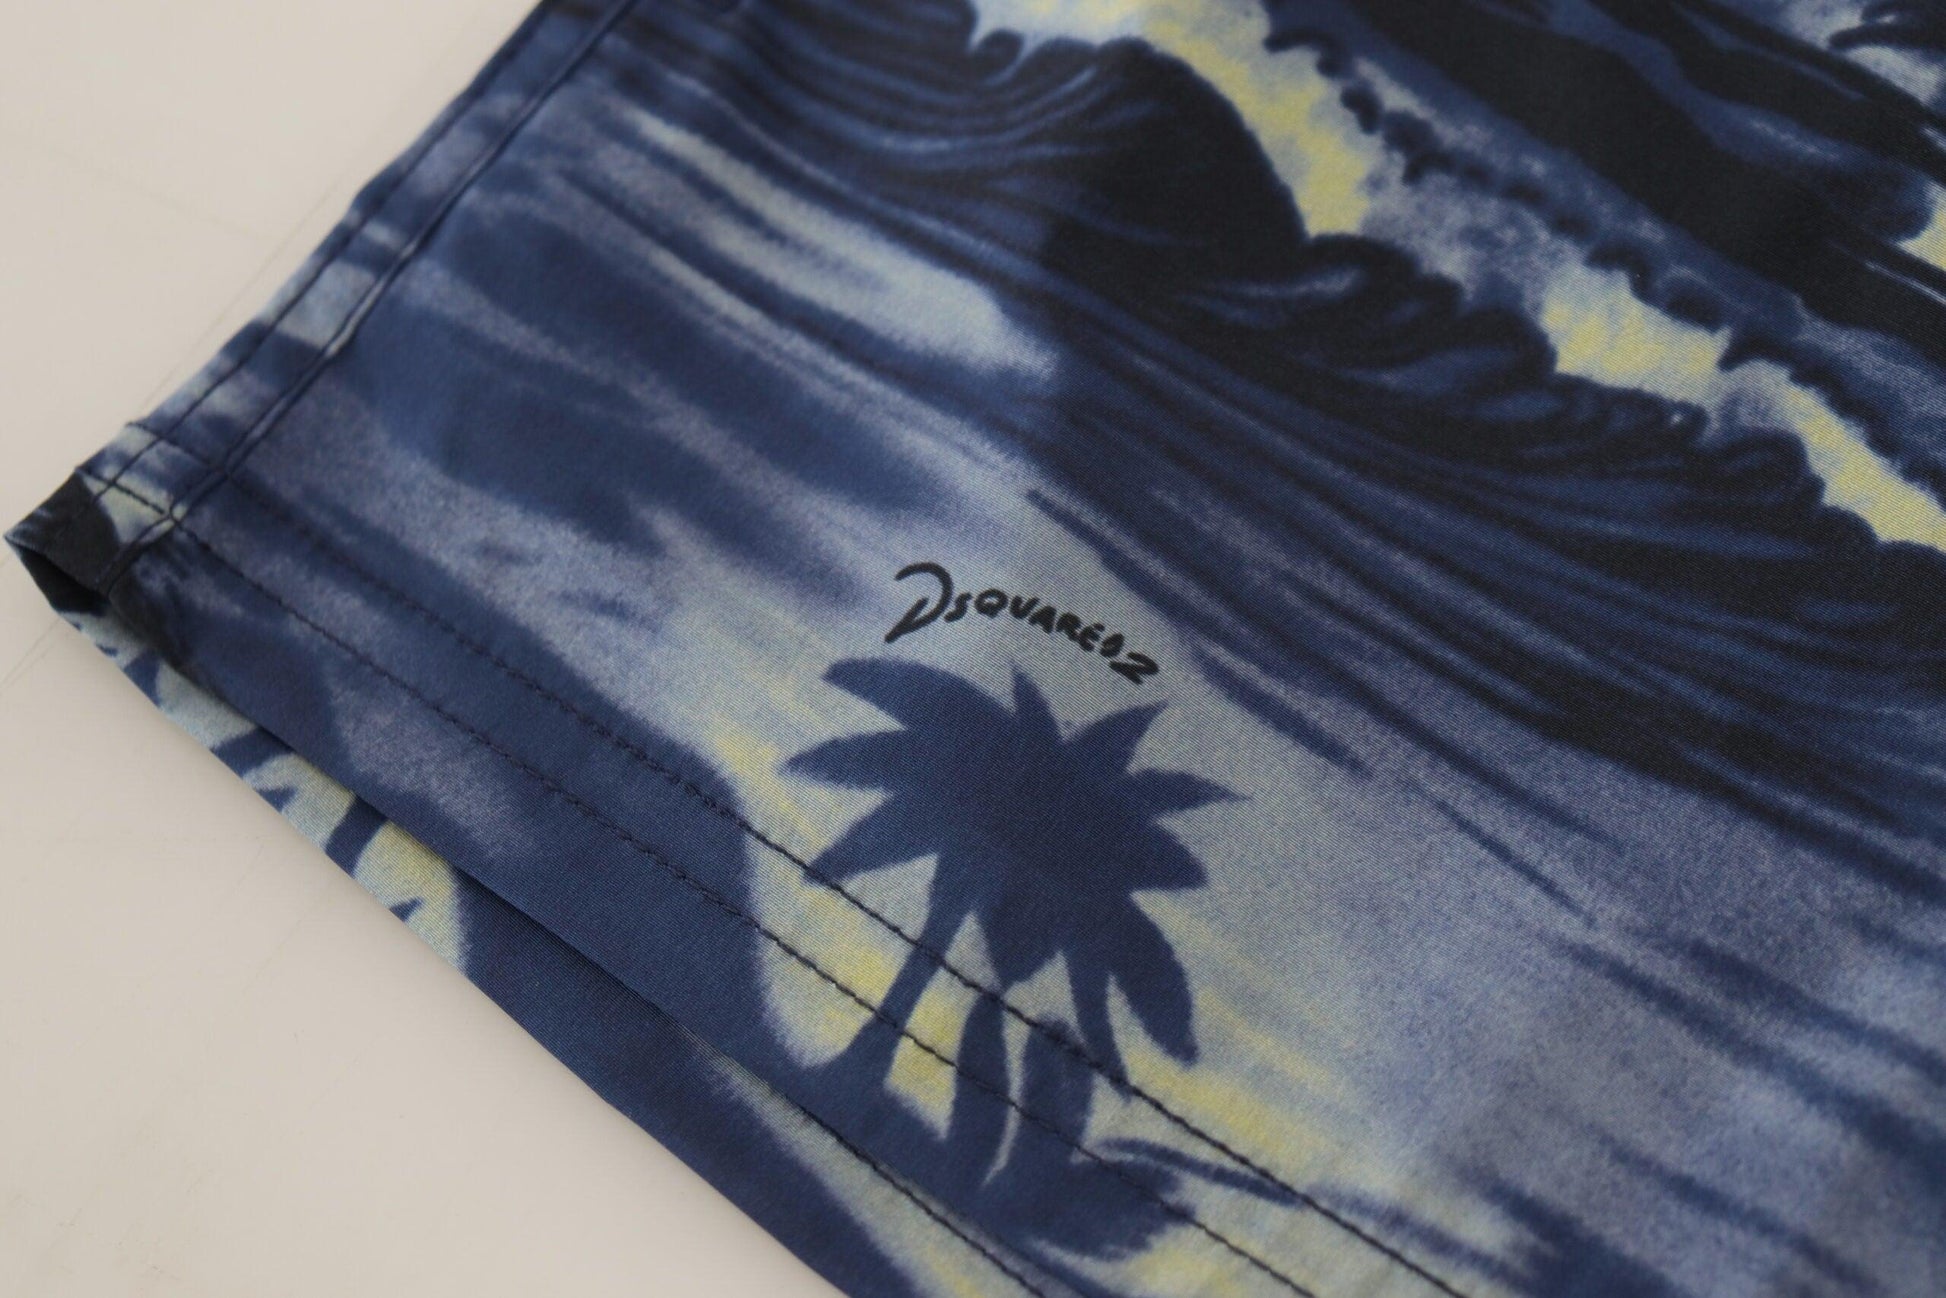 Dsquared² Tropical Wave Design Swim Shorts - PER.FASHION